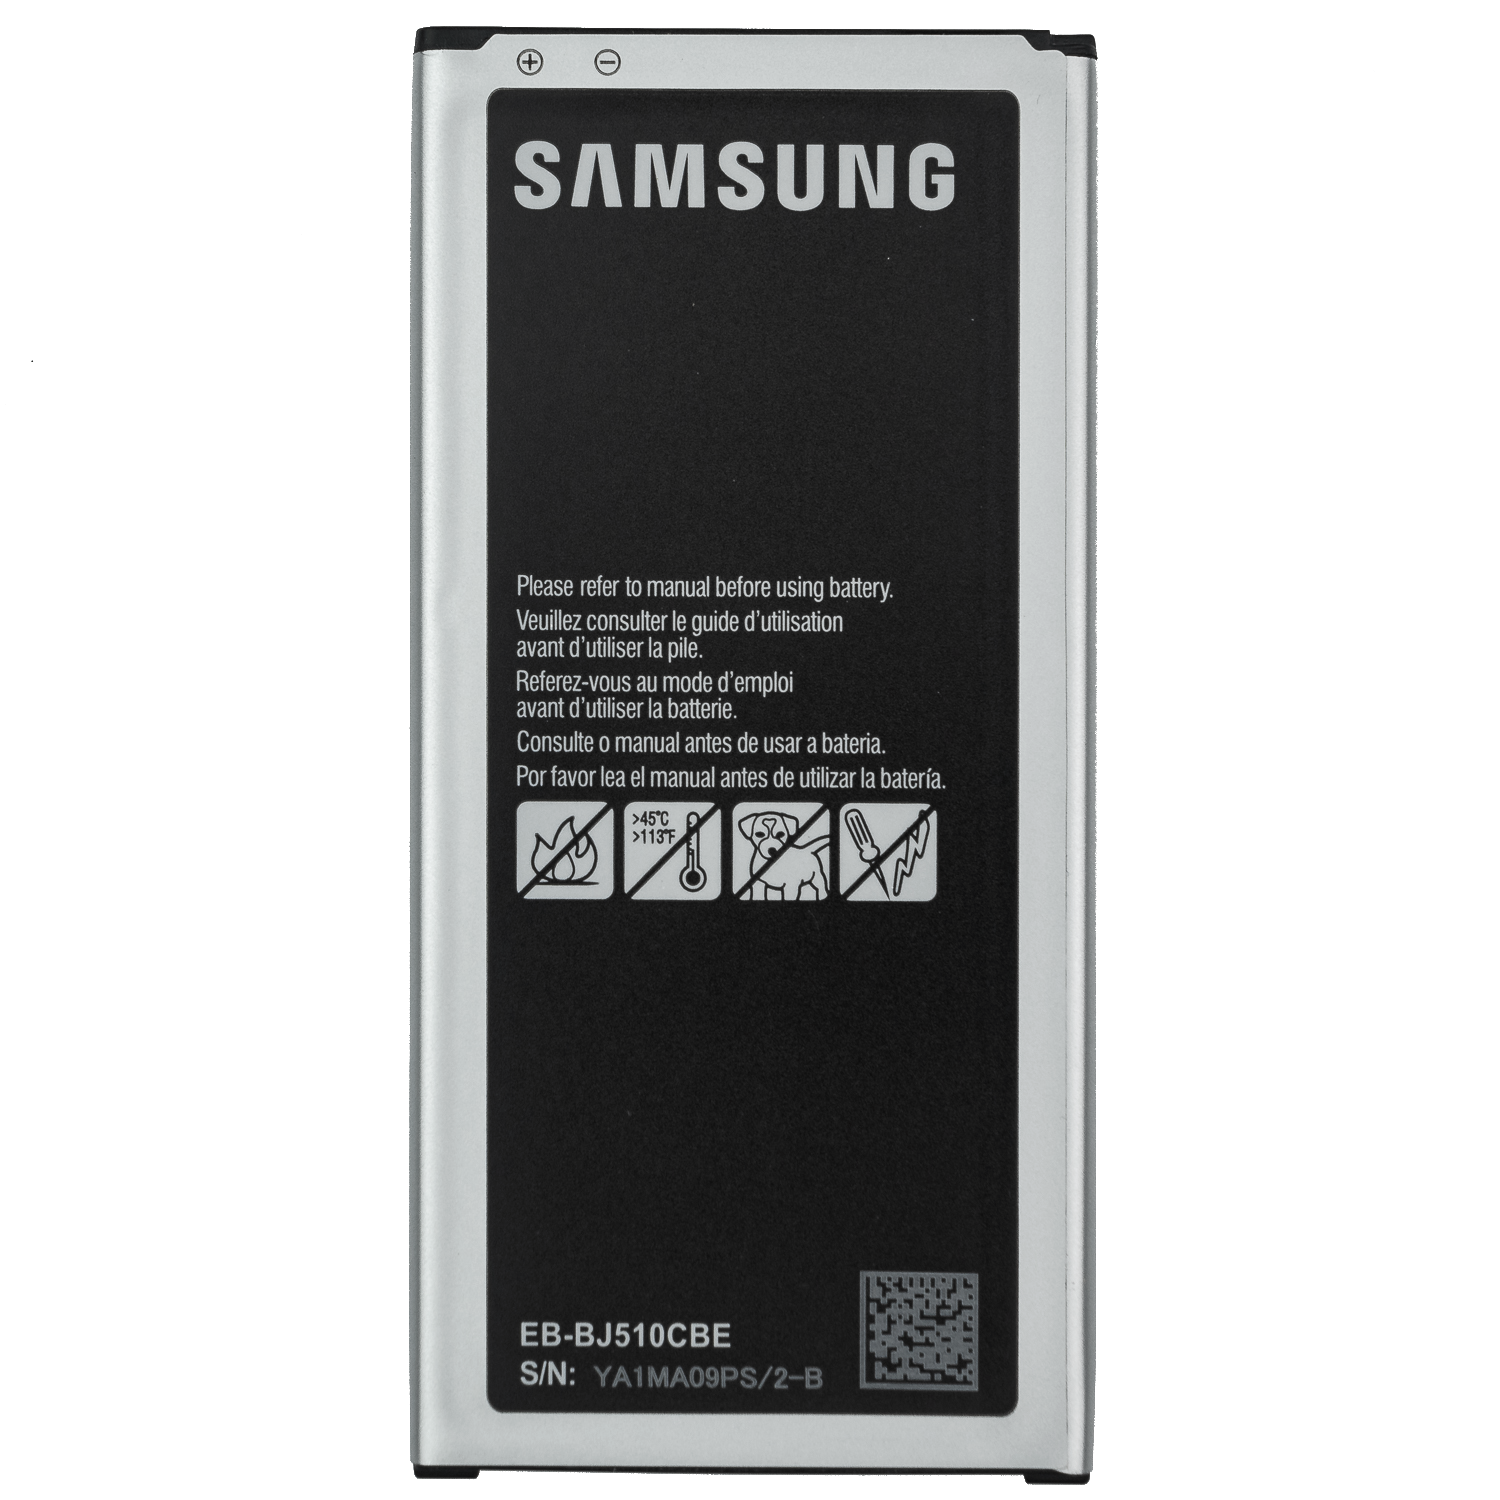 Hollywood Persoon belast met sportgame component Samsung Galaxy J5 2016 batterij (origineel) kopen? - 10 jaar+ ervaring |  Partly